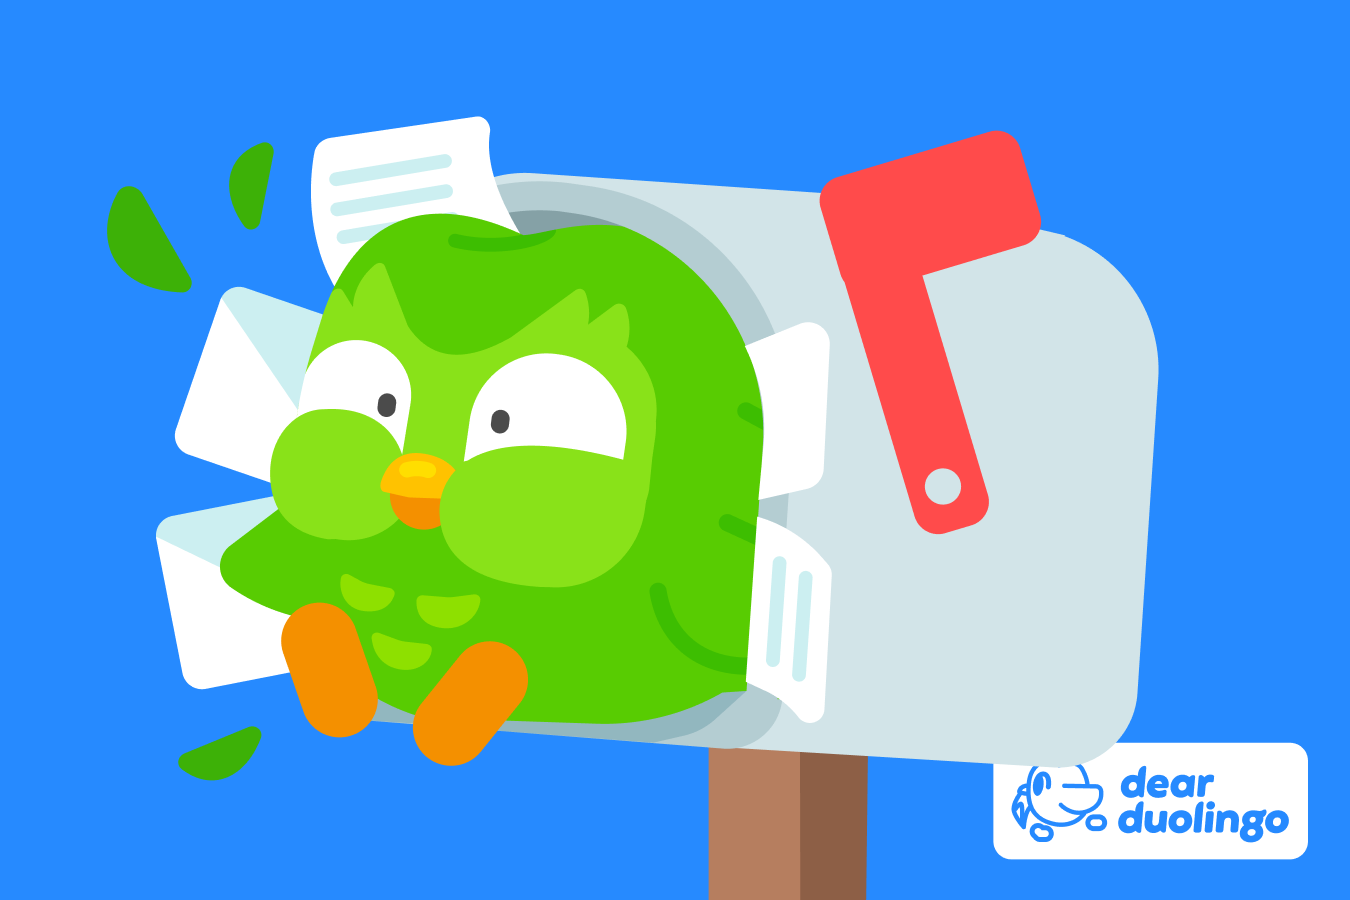 Dear Duolingo: celebrating one year of Dear Duolingo!